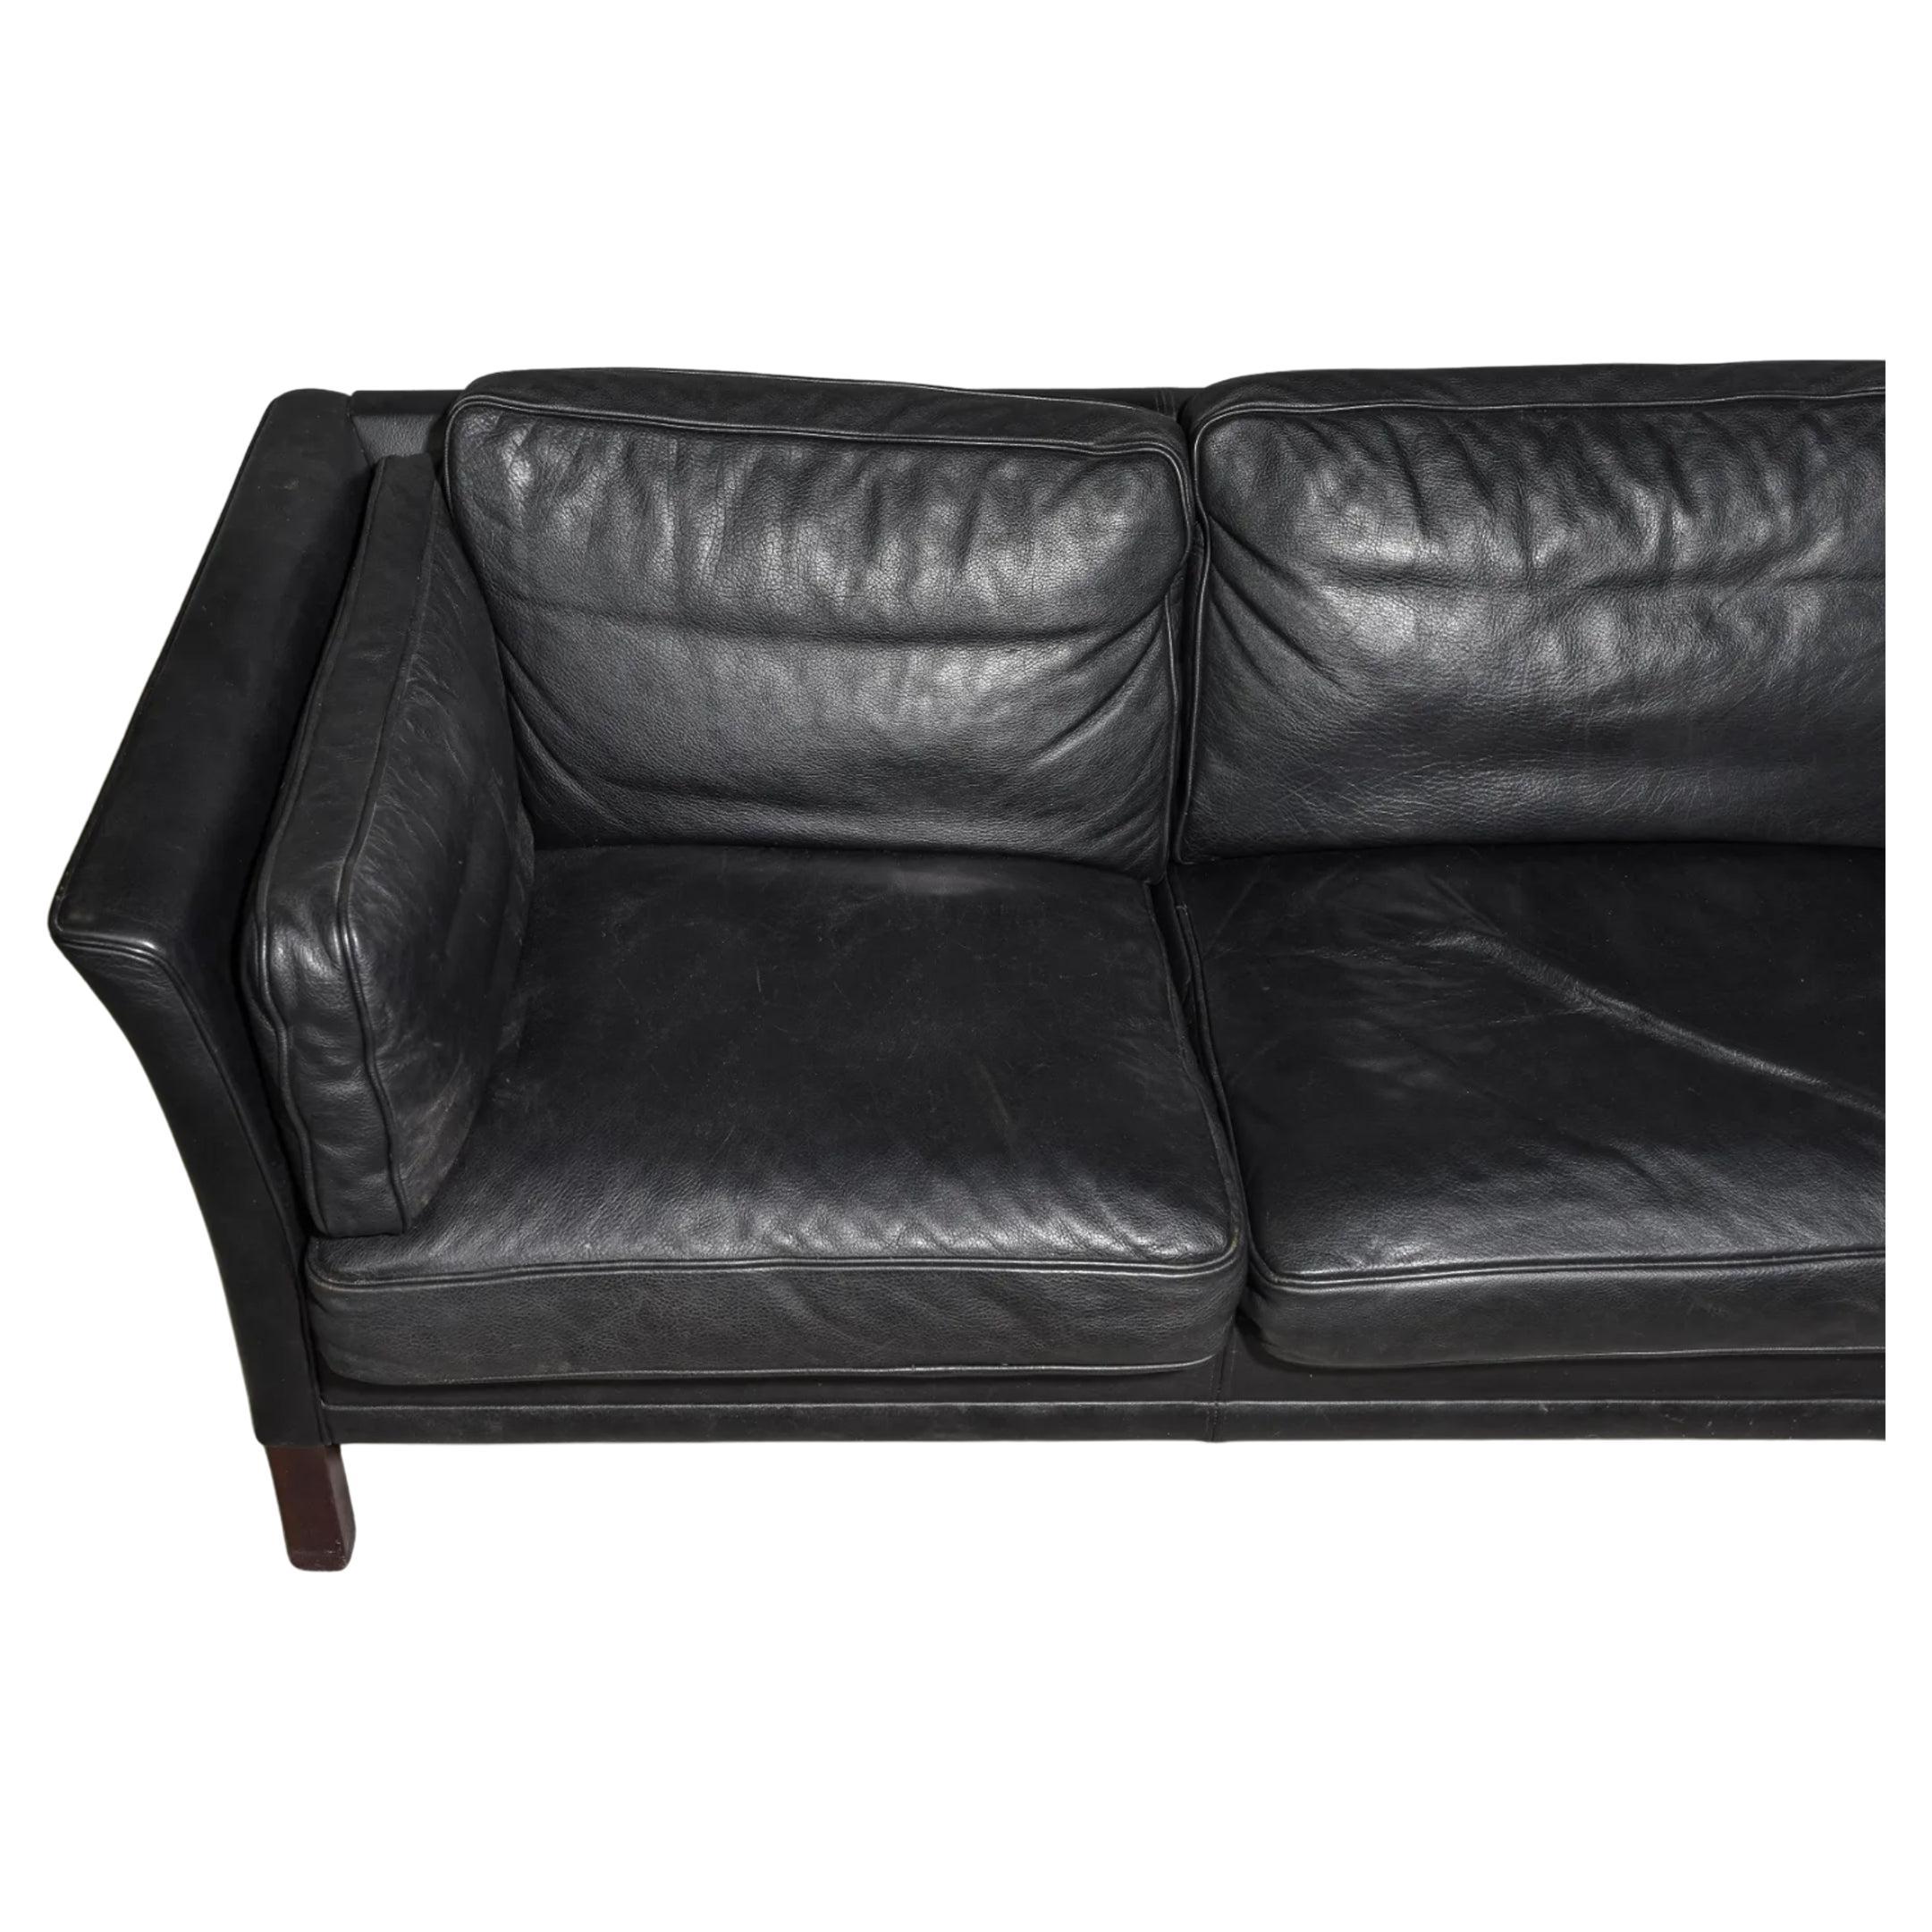 Woodwork Midcentury Danish Modern Low Curved Arm Black Leather 3 Seat Sofa Wood Legs